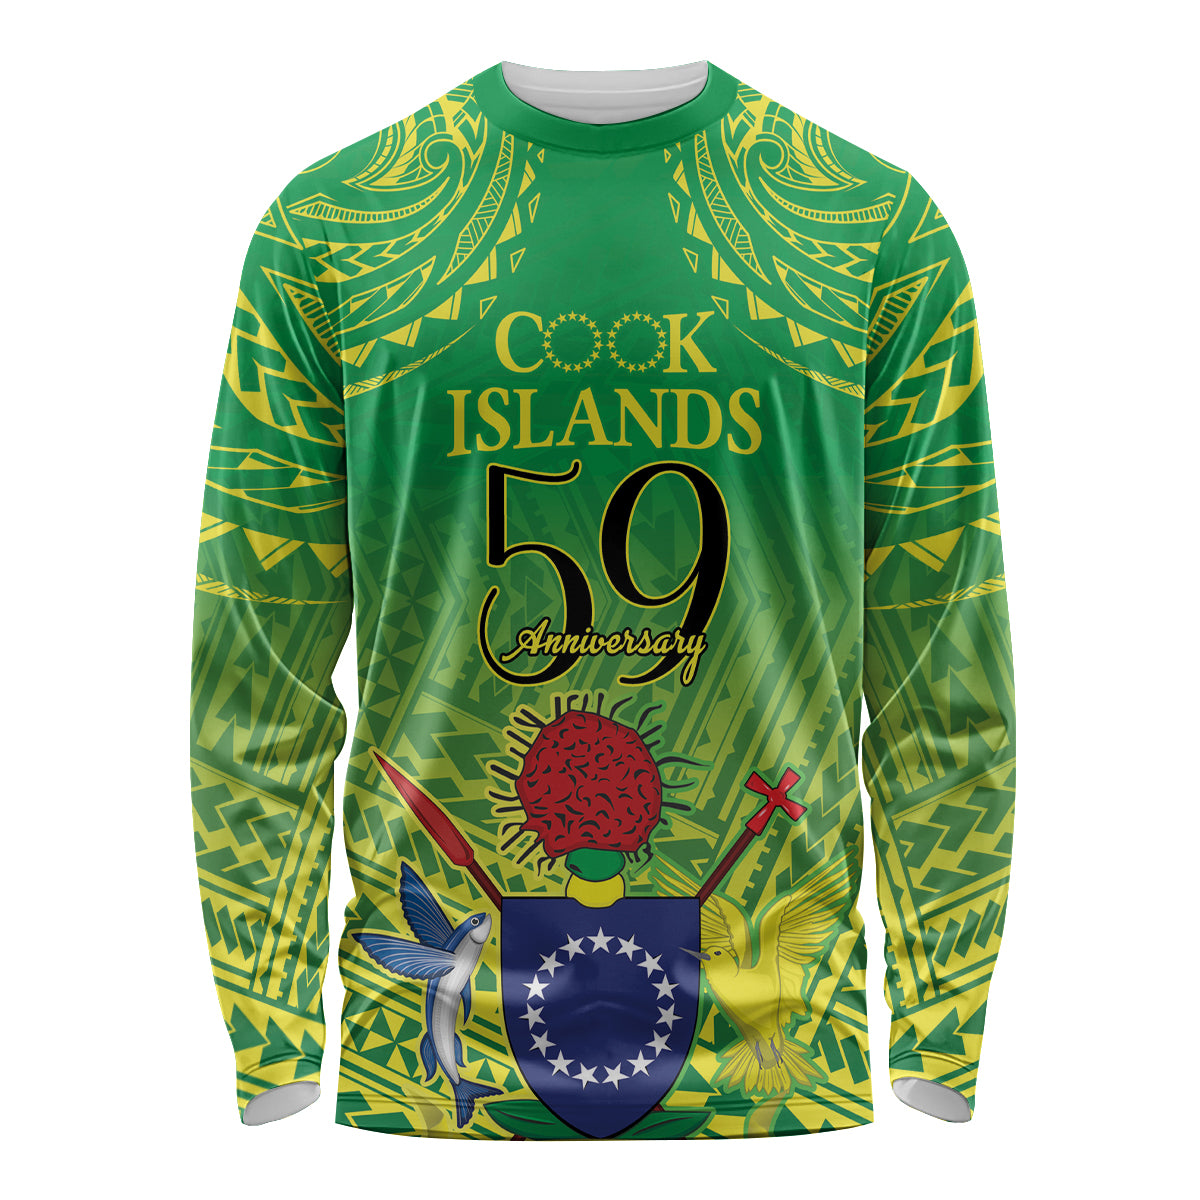 Cook Islands Constitution Day Long Sleeve Shirt Kuki Airani Since 1965